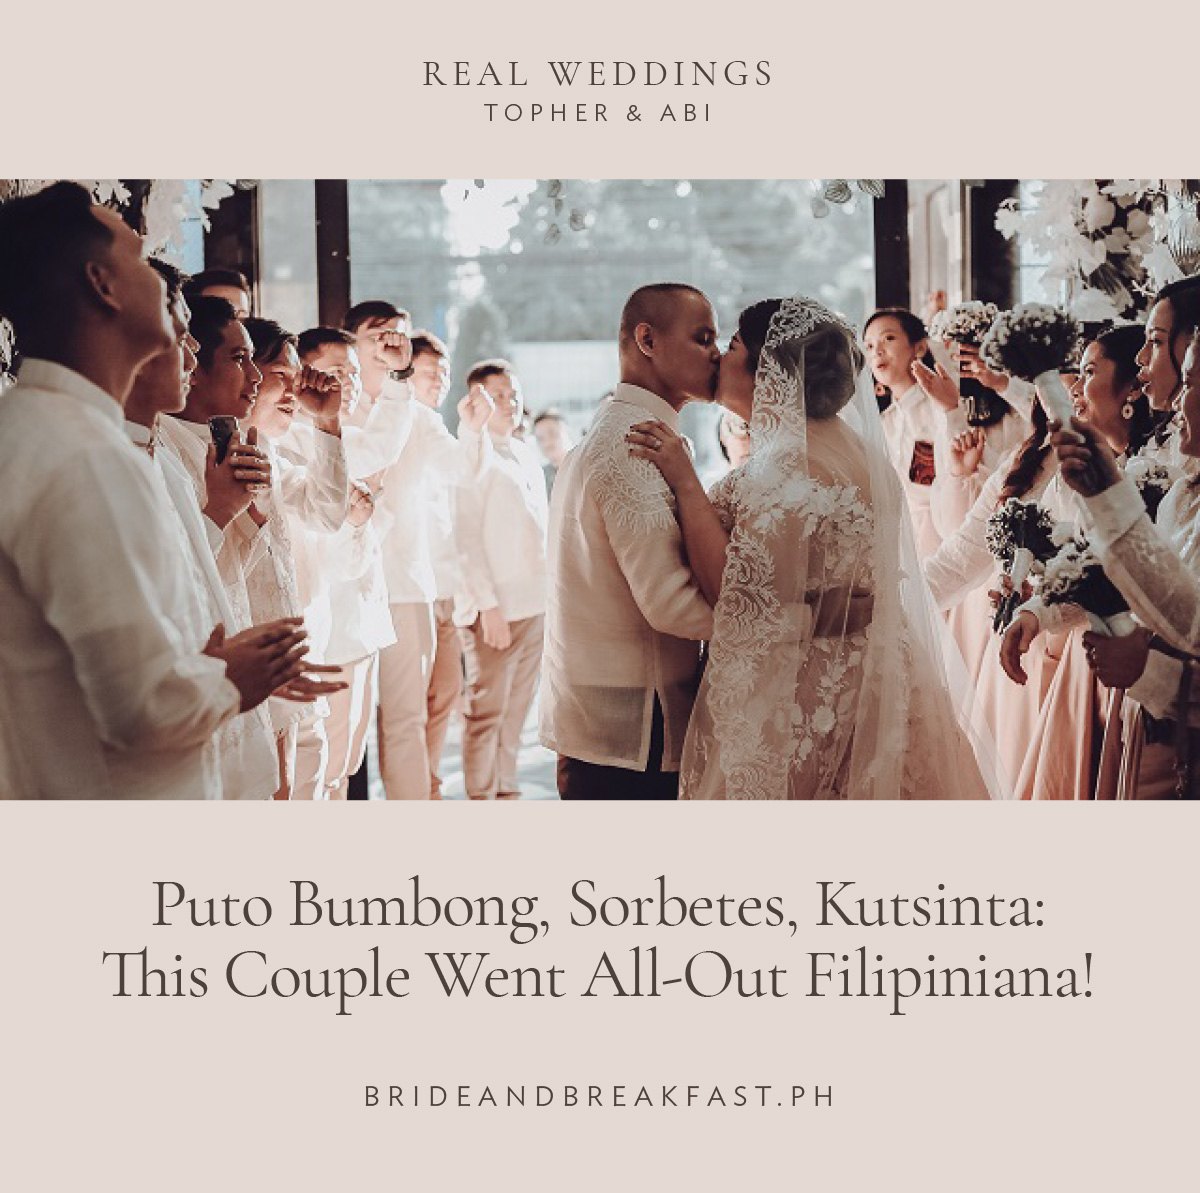 Puto Bumbong, Sorbetes, Kutsinta: This Couple Went All-Out Filipiniana!